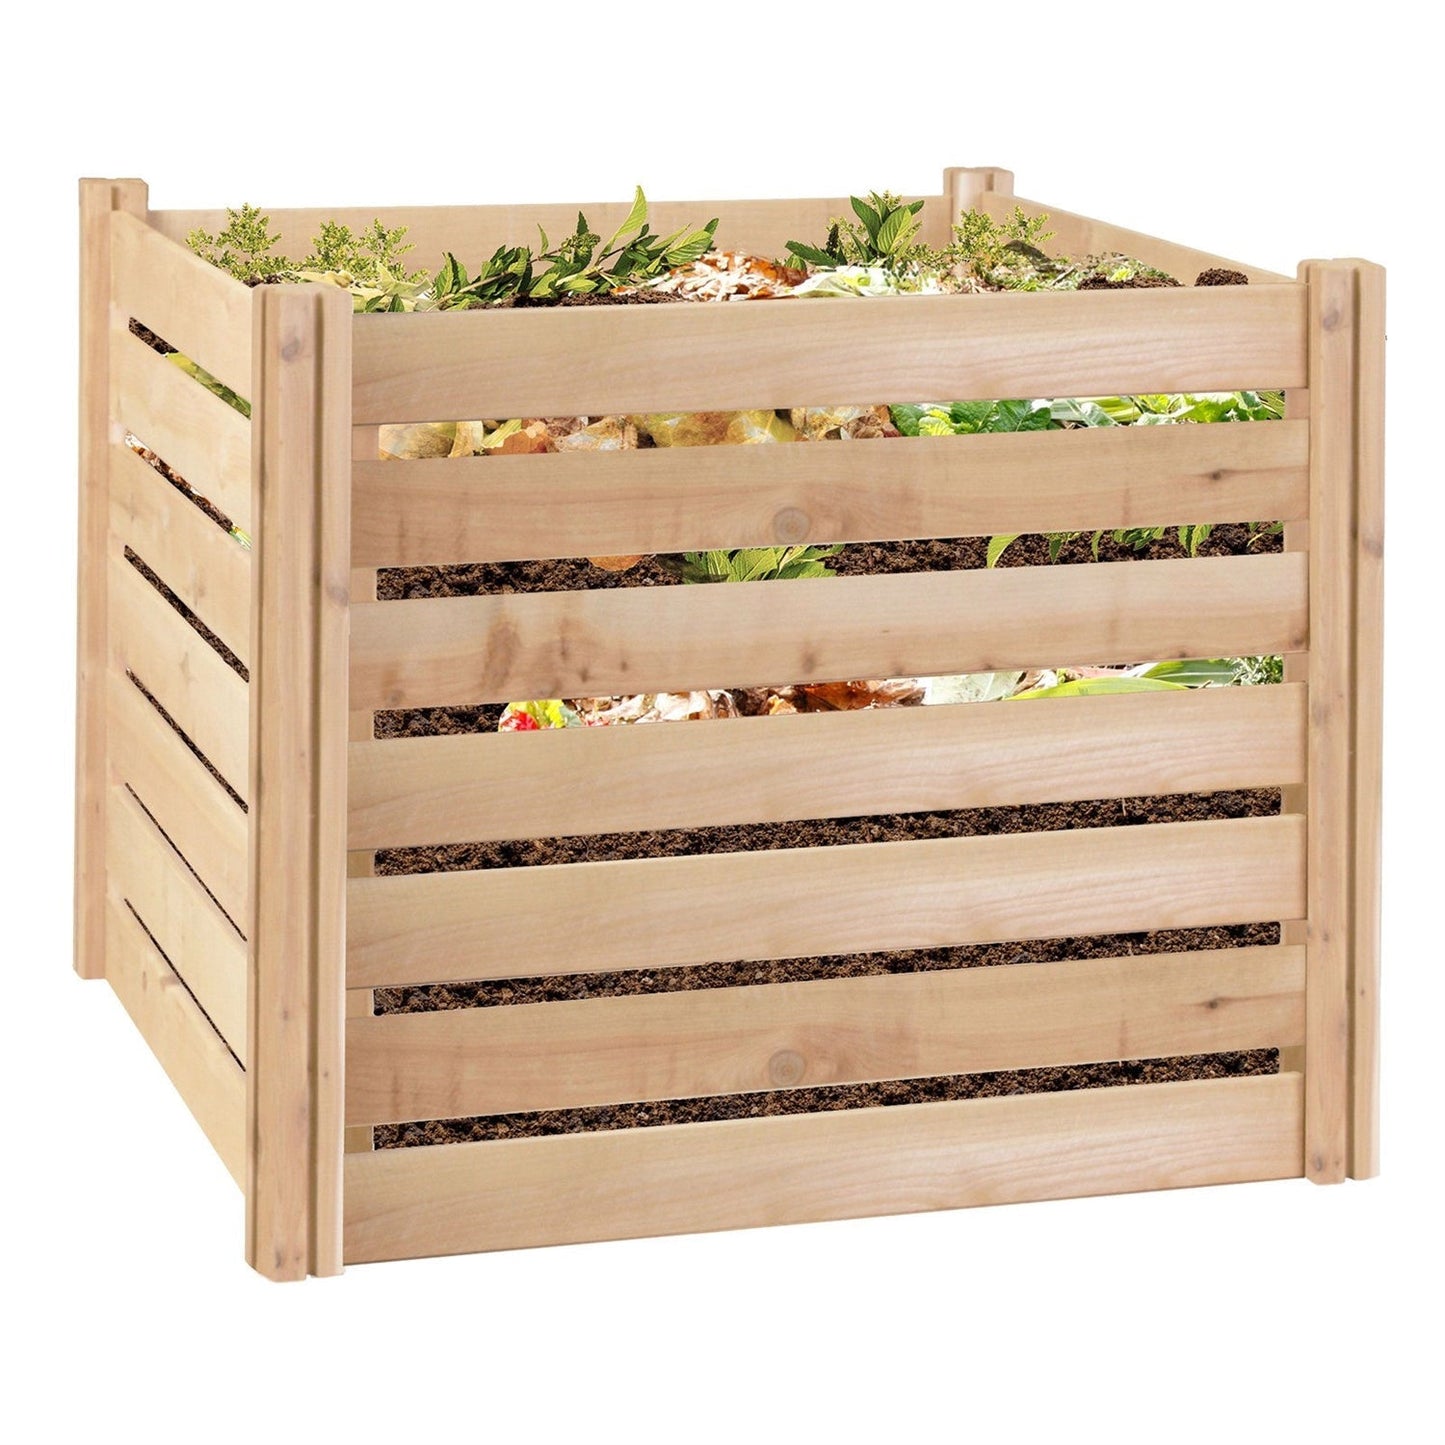 Eco-Friendly Outdoor Compost Bin